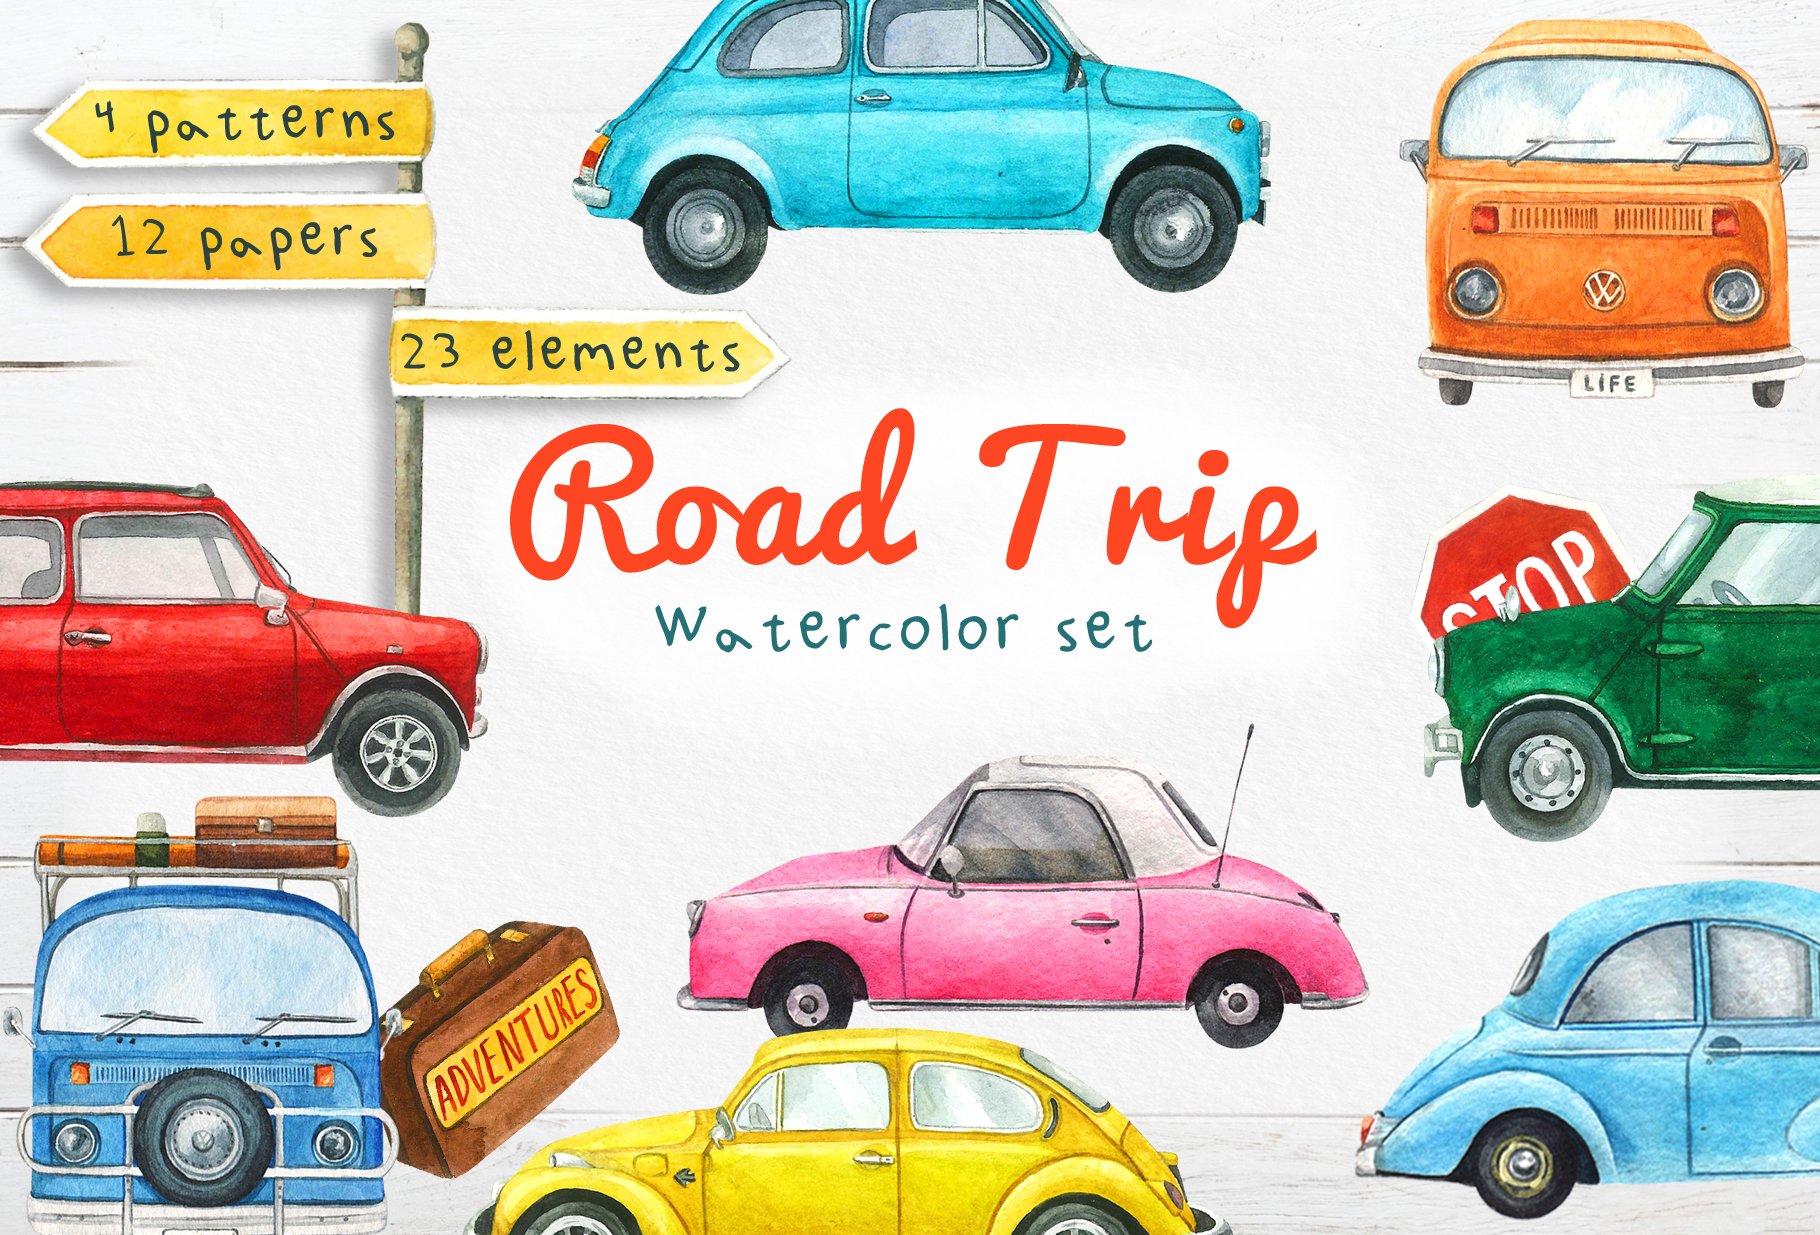 Road trip watercolor set cover image.